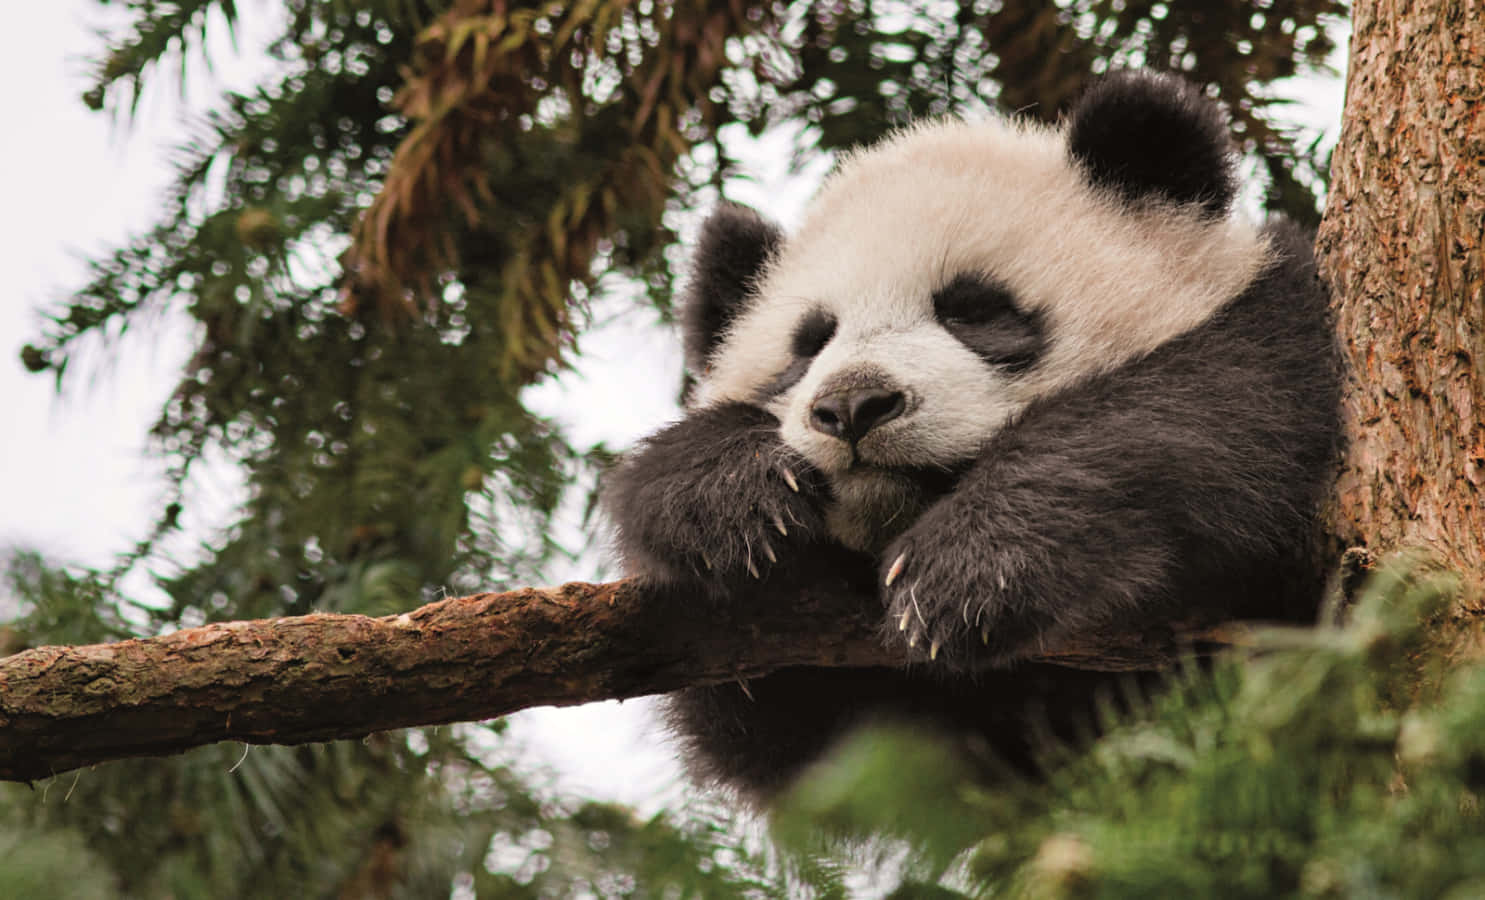 Adorable Panda Eating Bamboo in its Natural Habitat